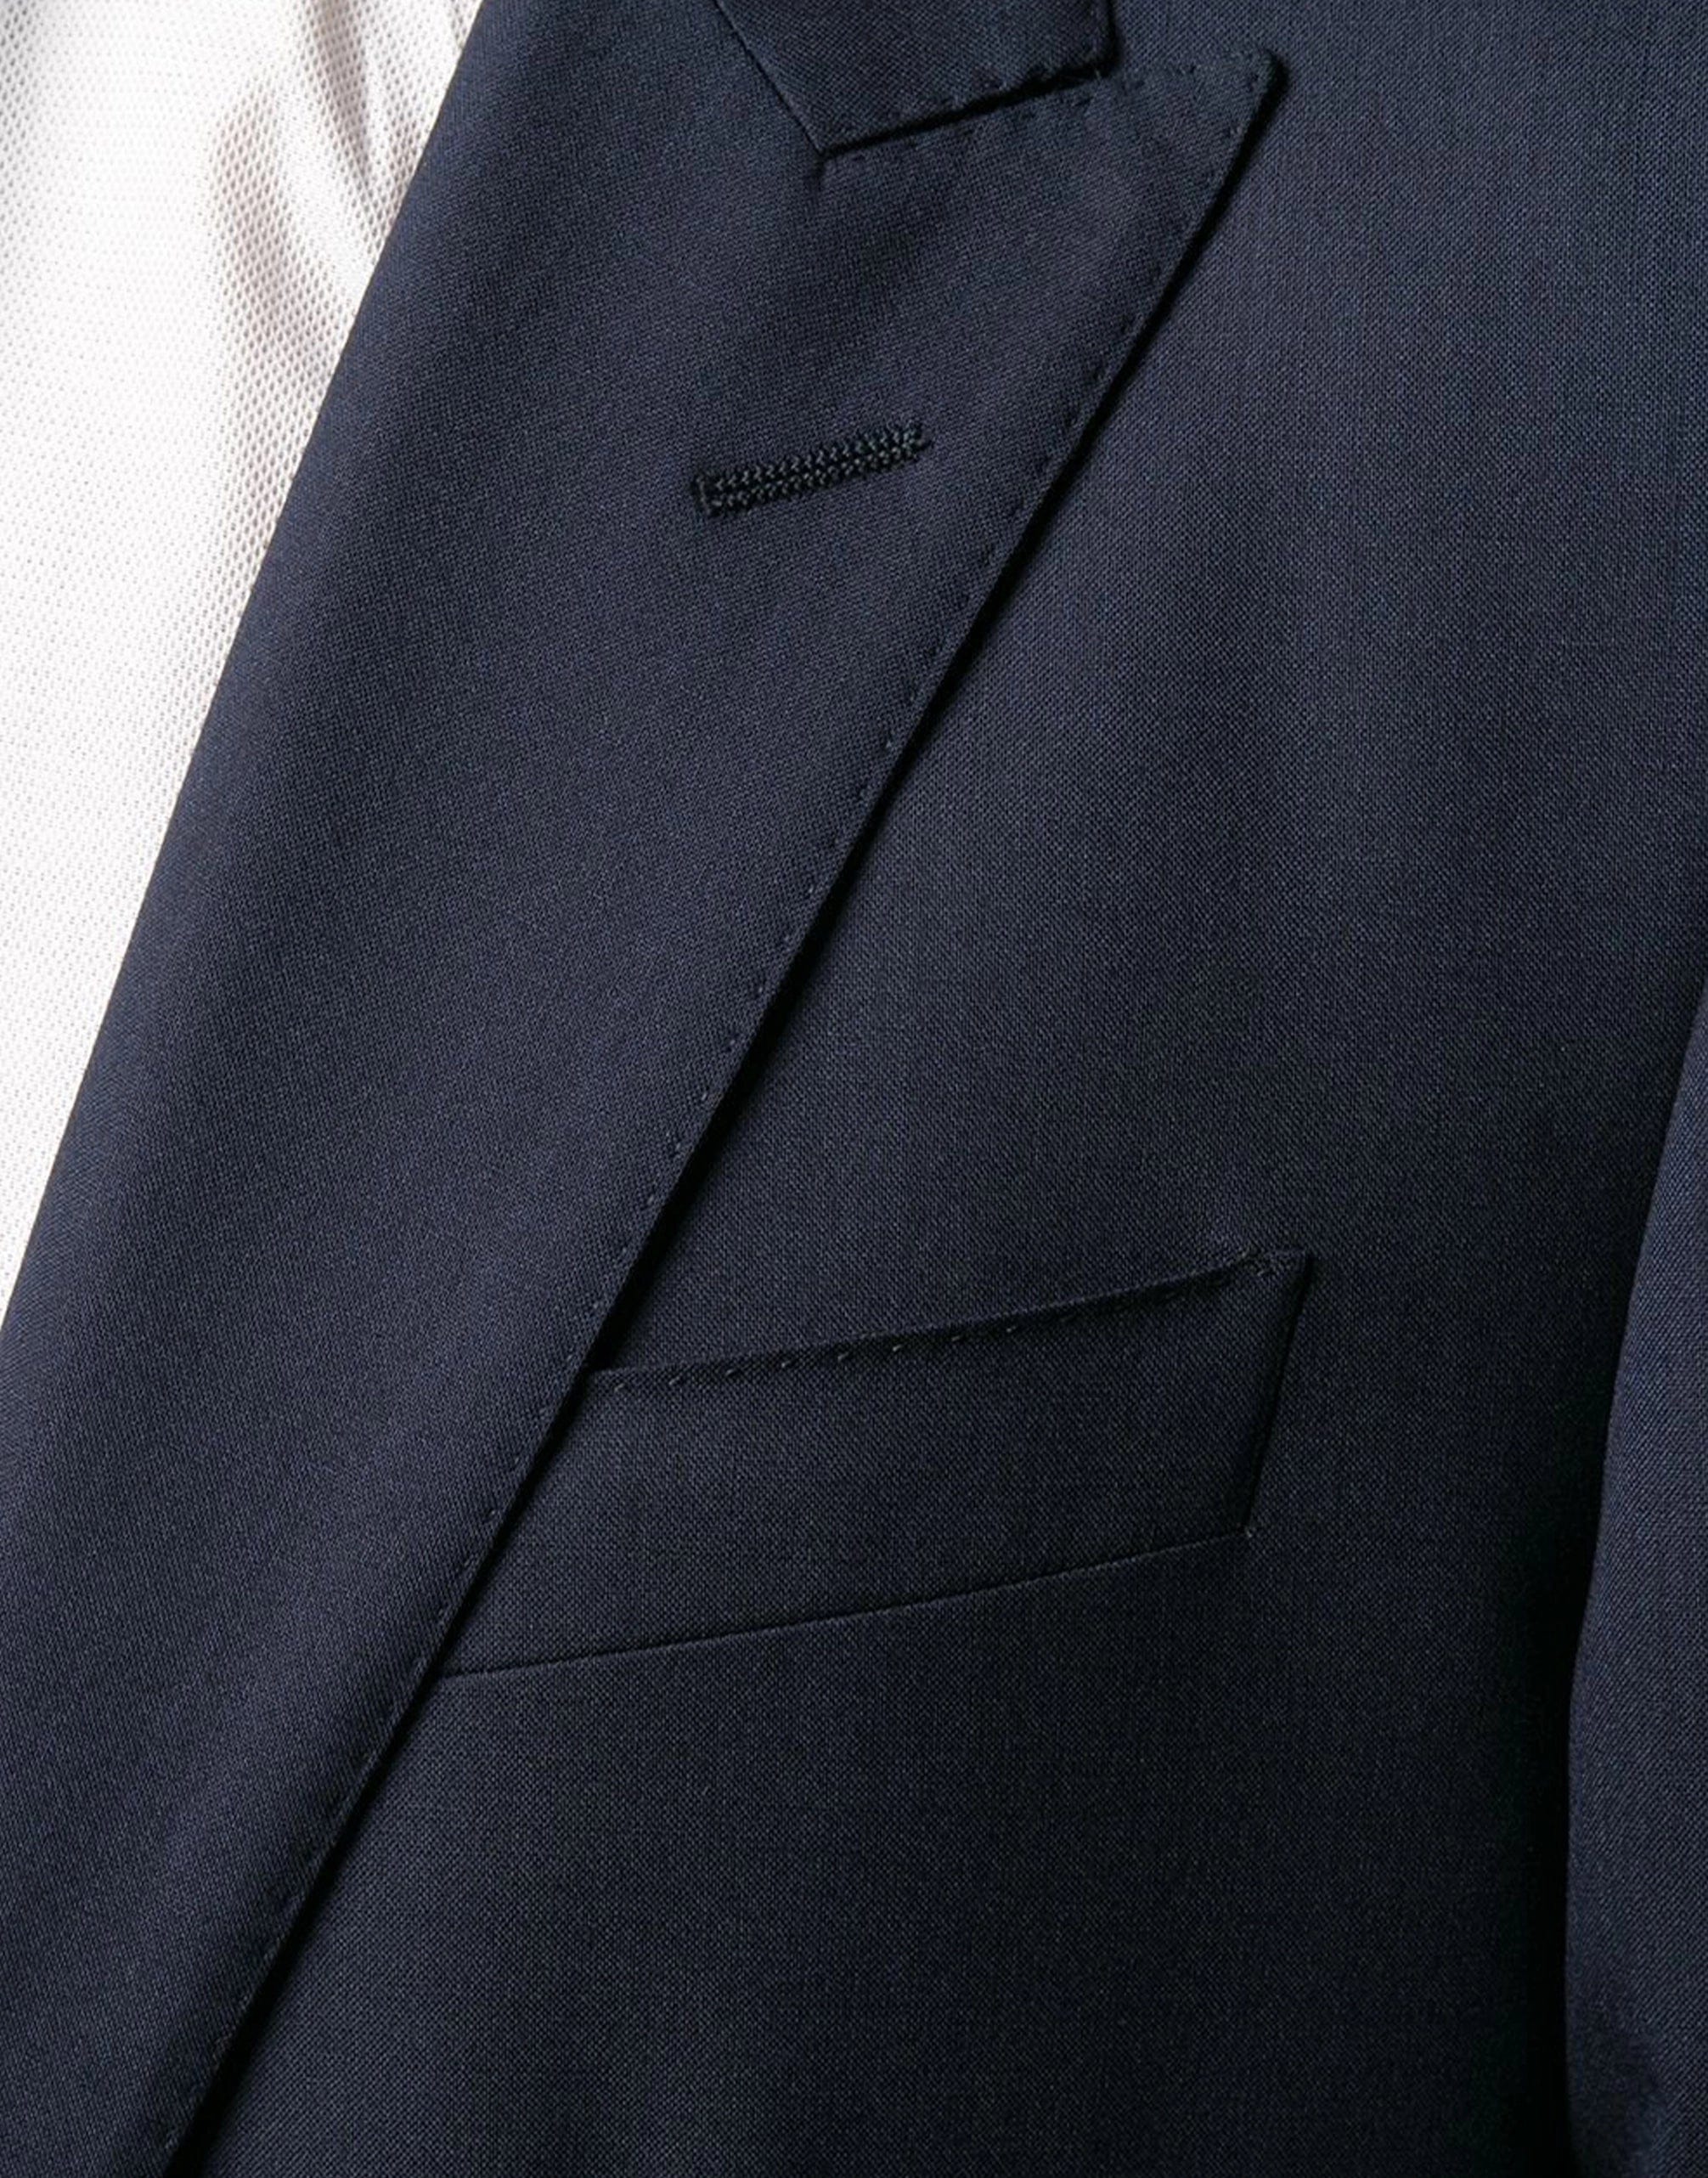 Dolce & Gabbana Mikado Silk Martini-fit Suit Jacket